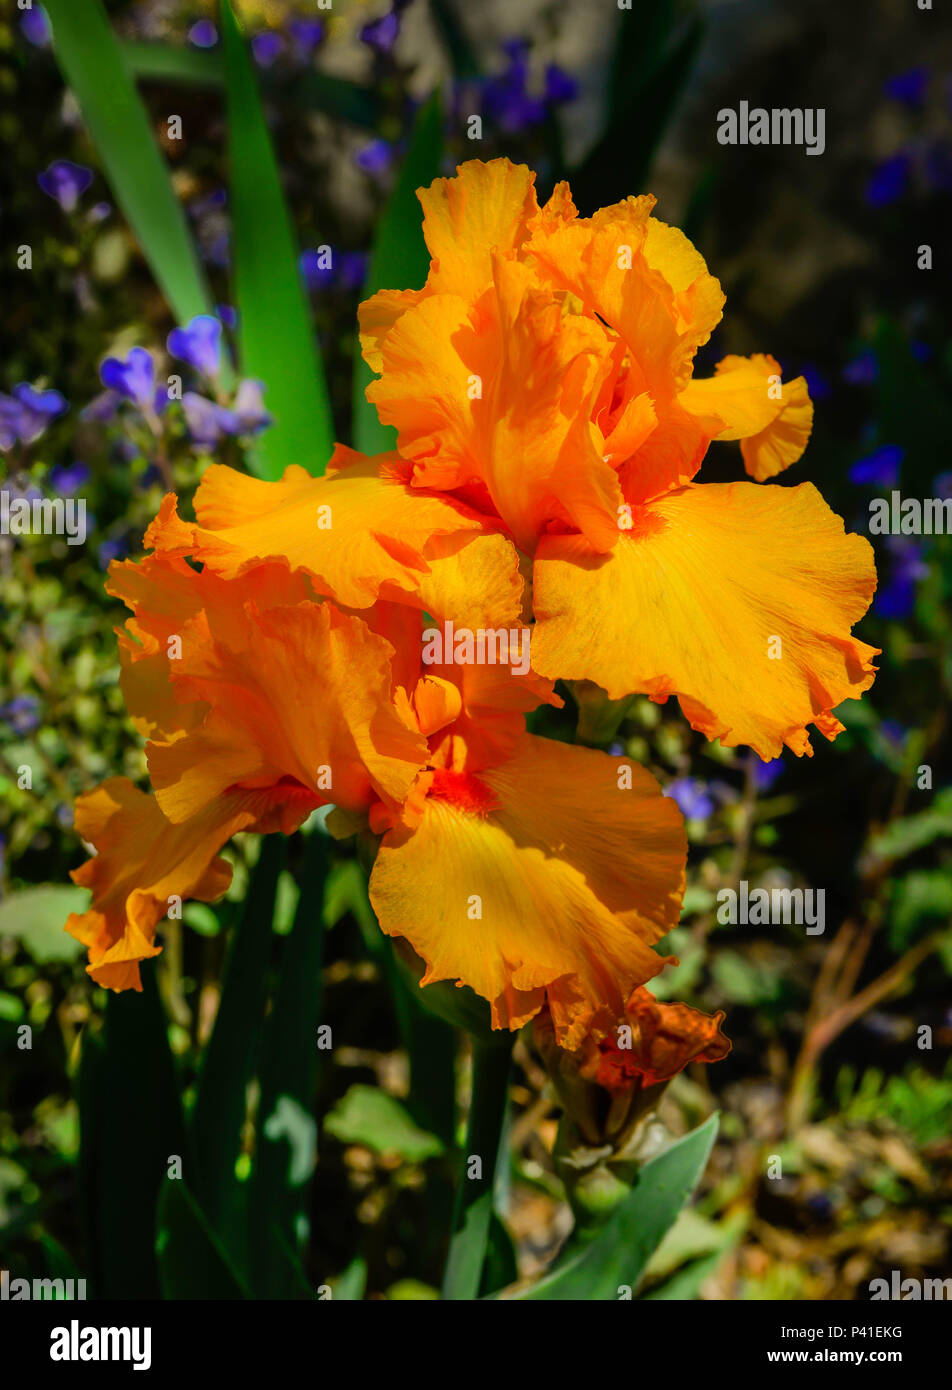 A single vividly intense orange bearded Iris bloom in an outside garden Stock Photo